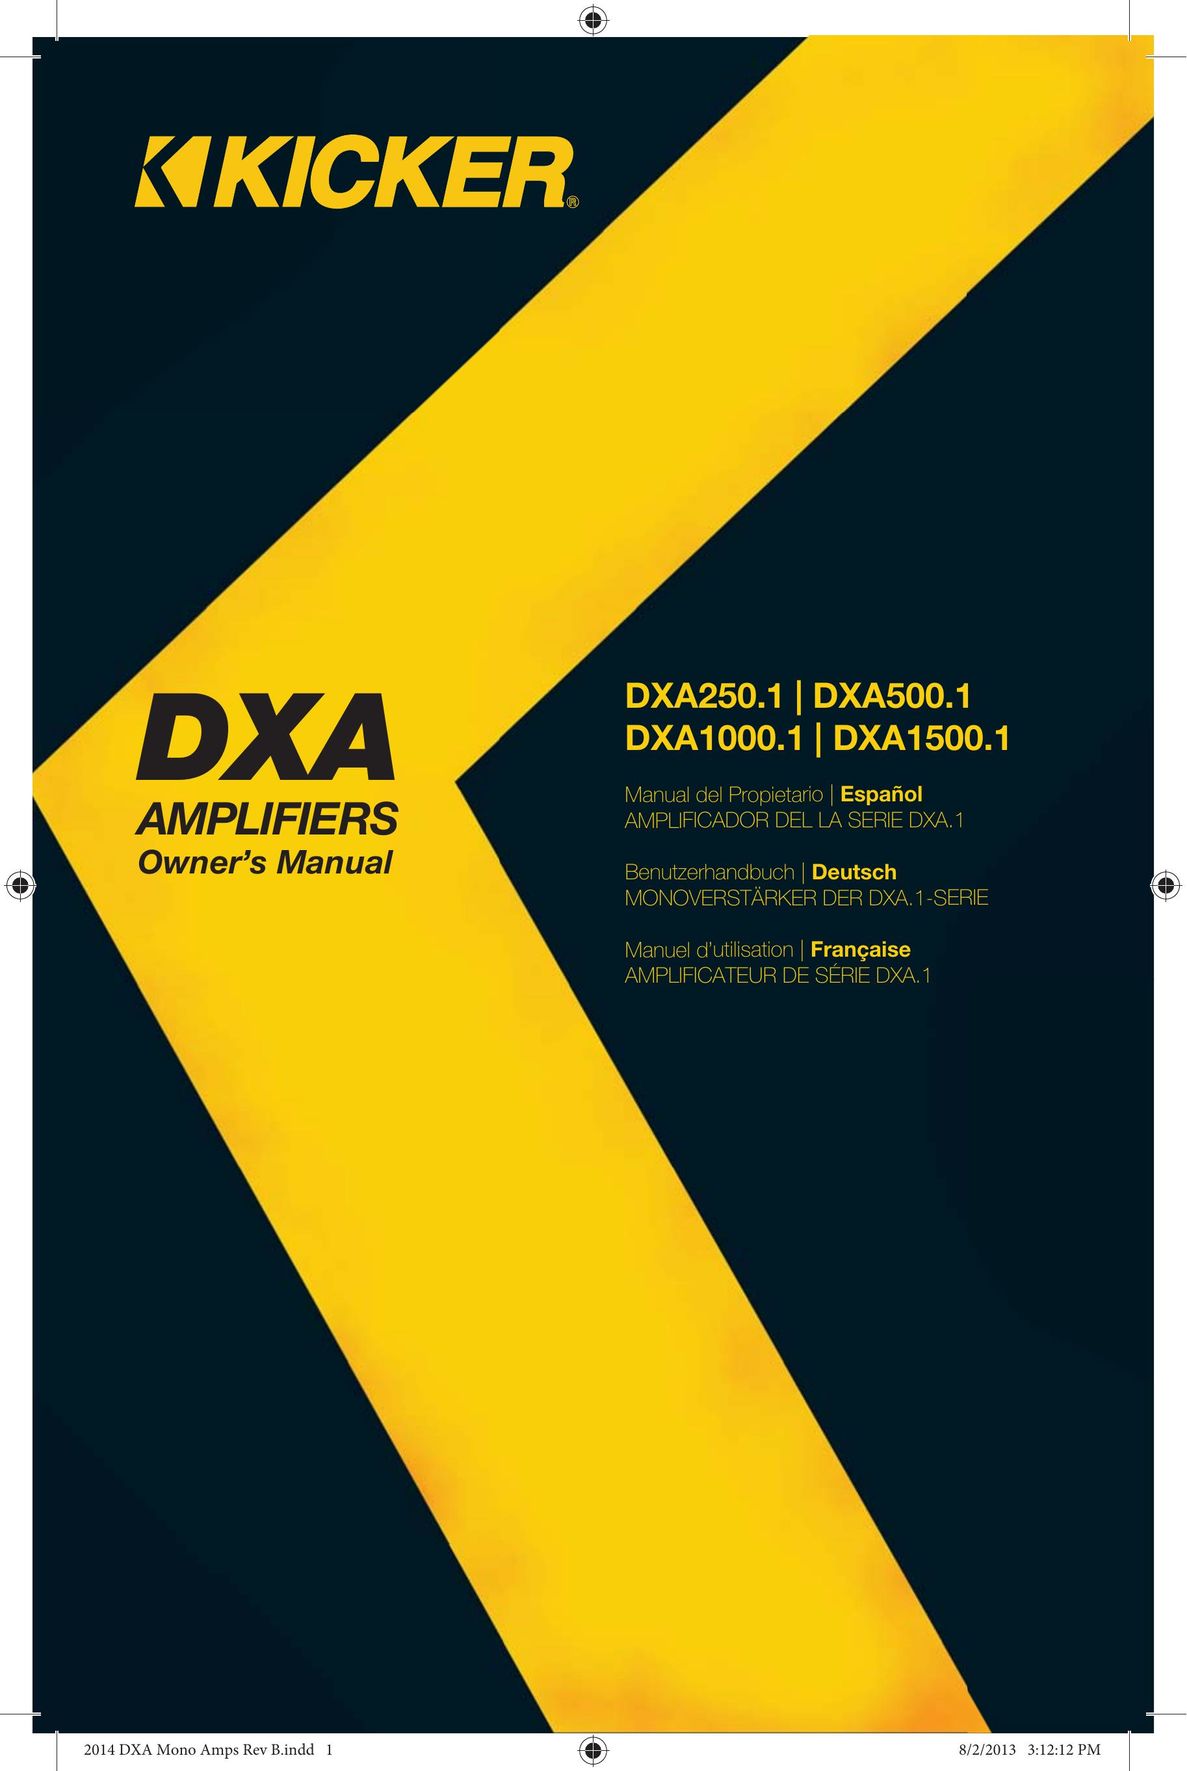 Kicker DXA1000.1 Car Amplifier User Manual